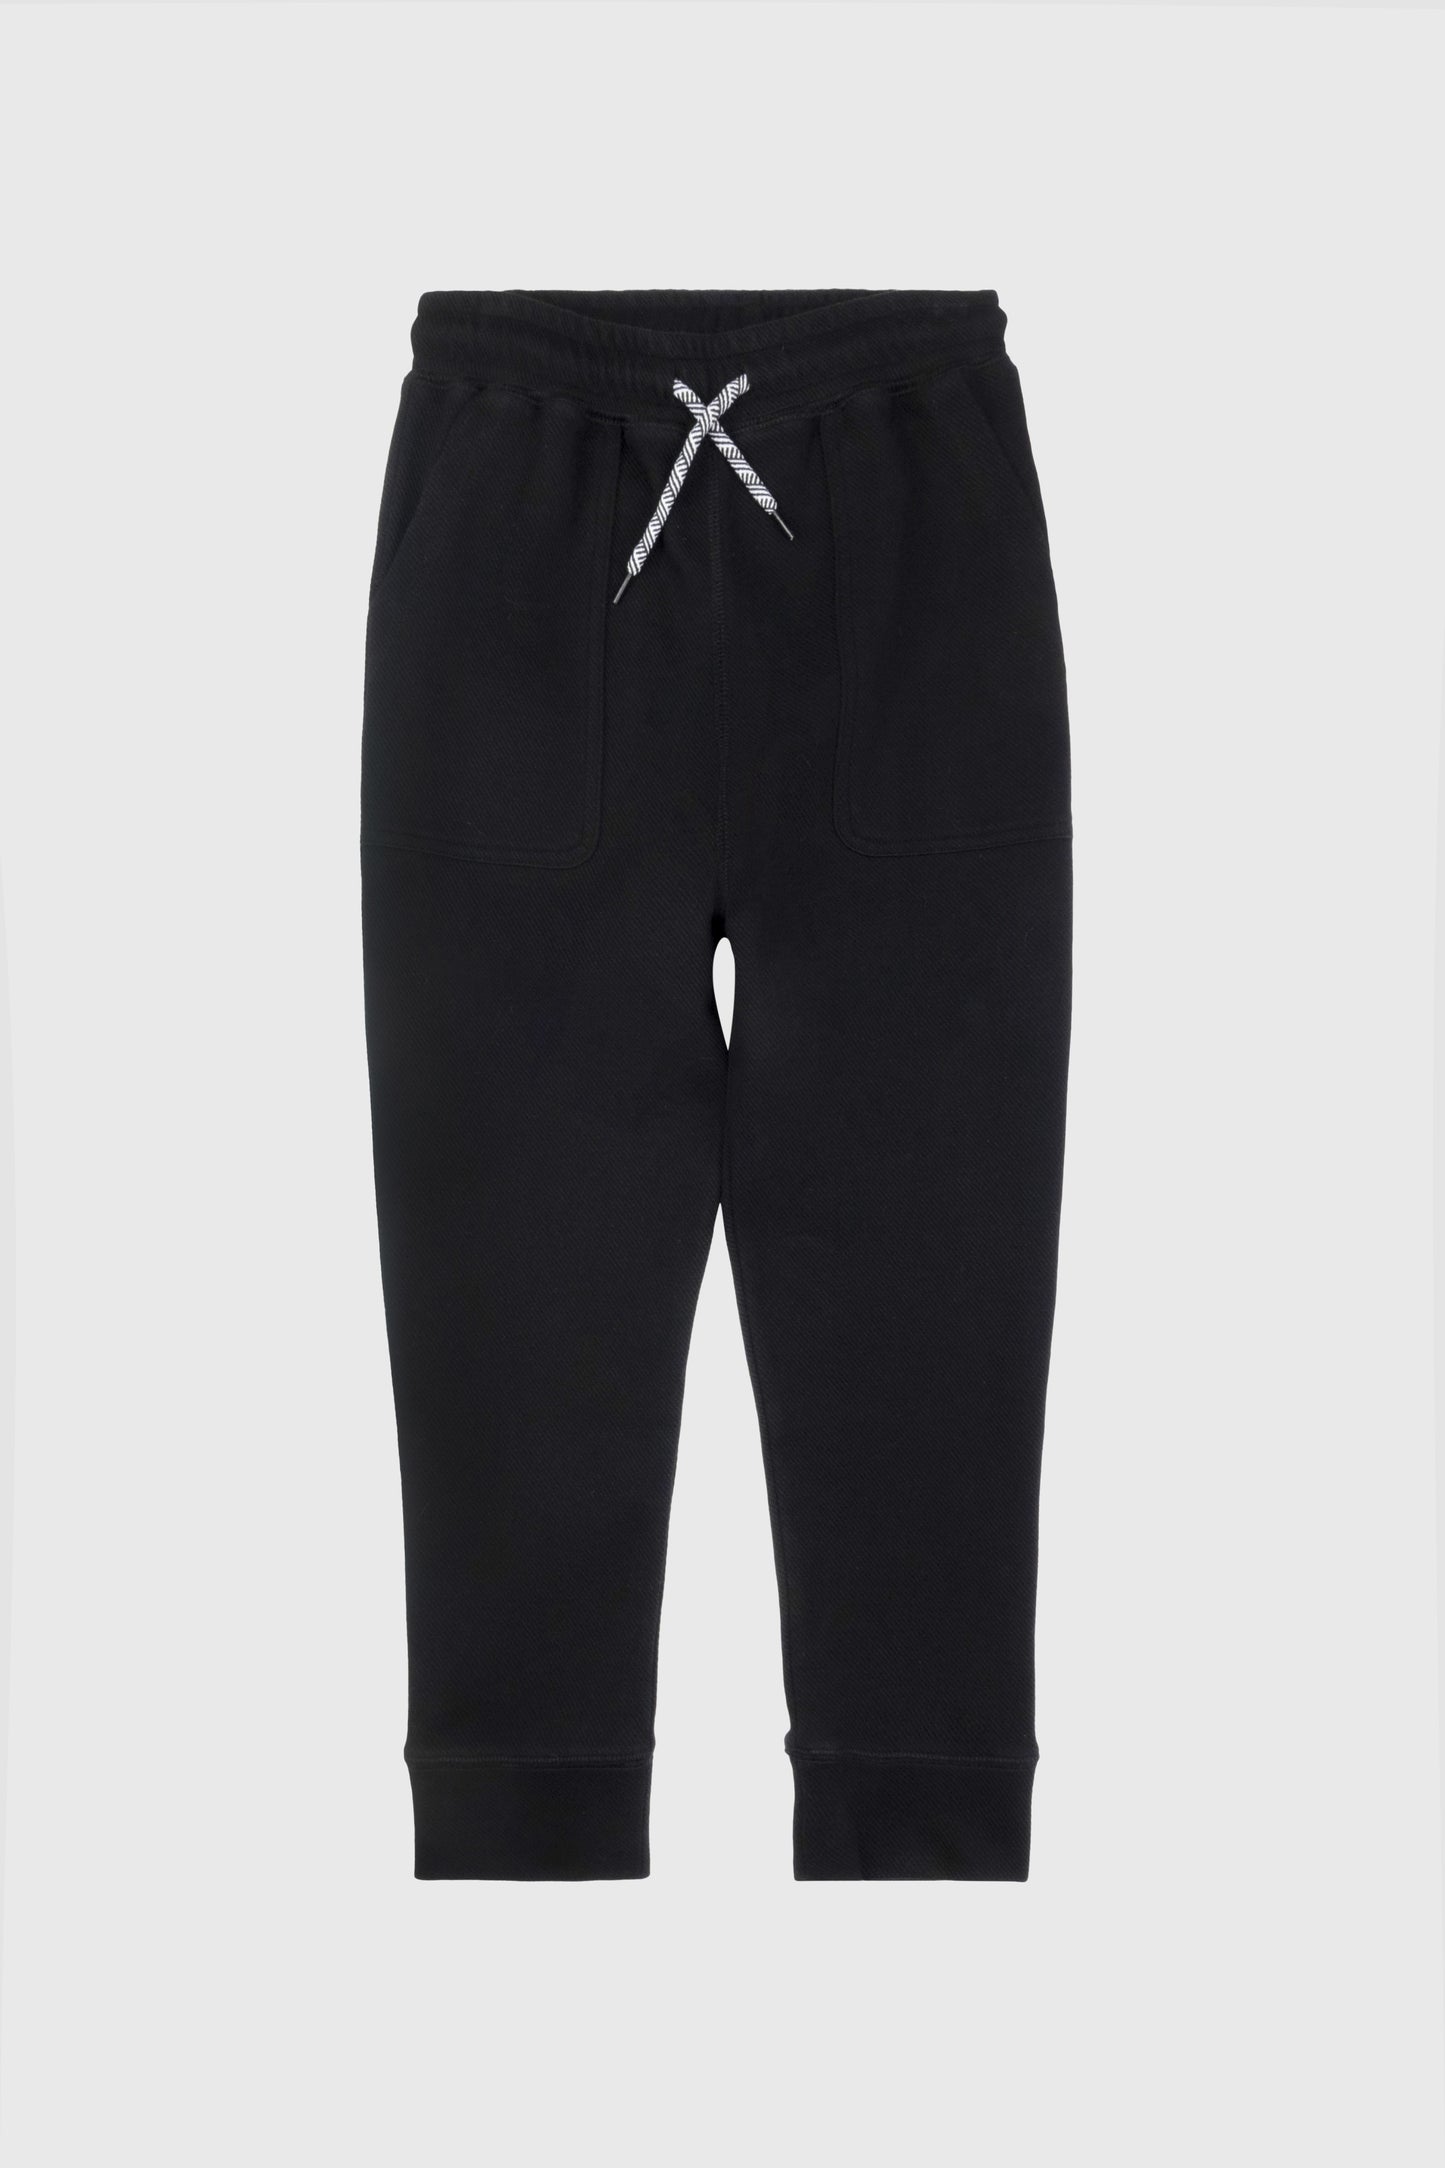 Appaman stretchy cozy black sweatpants